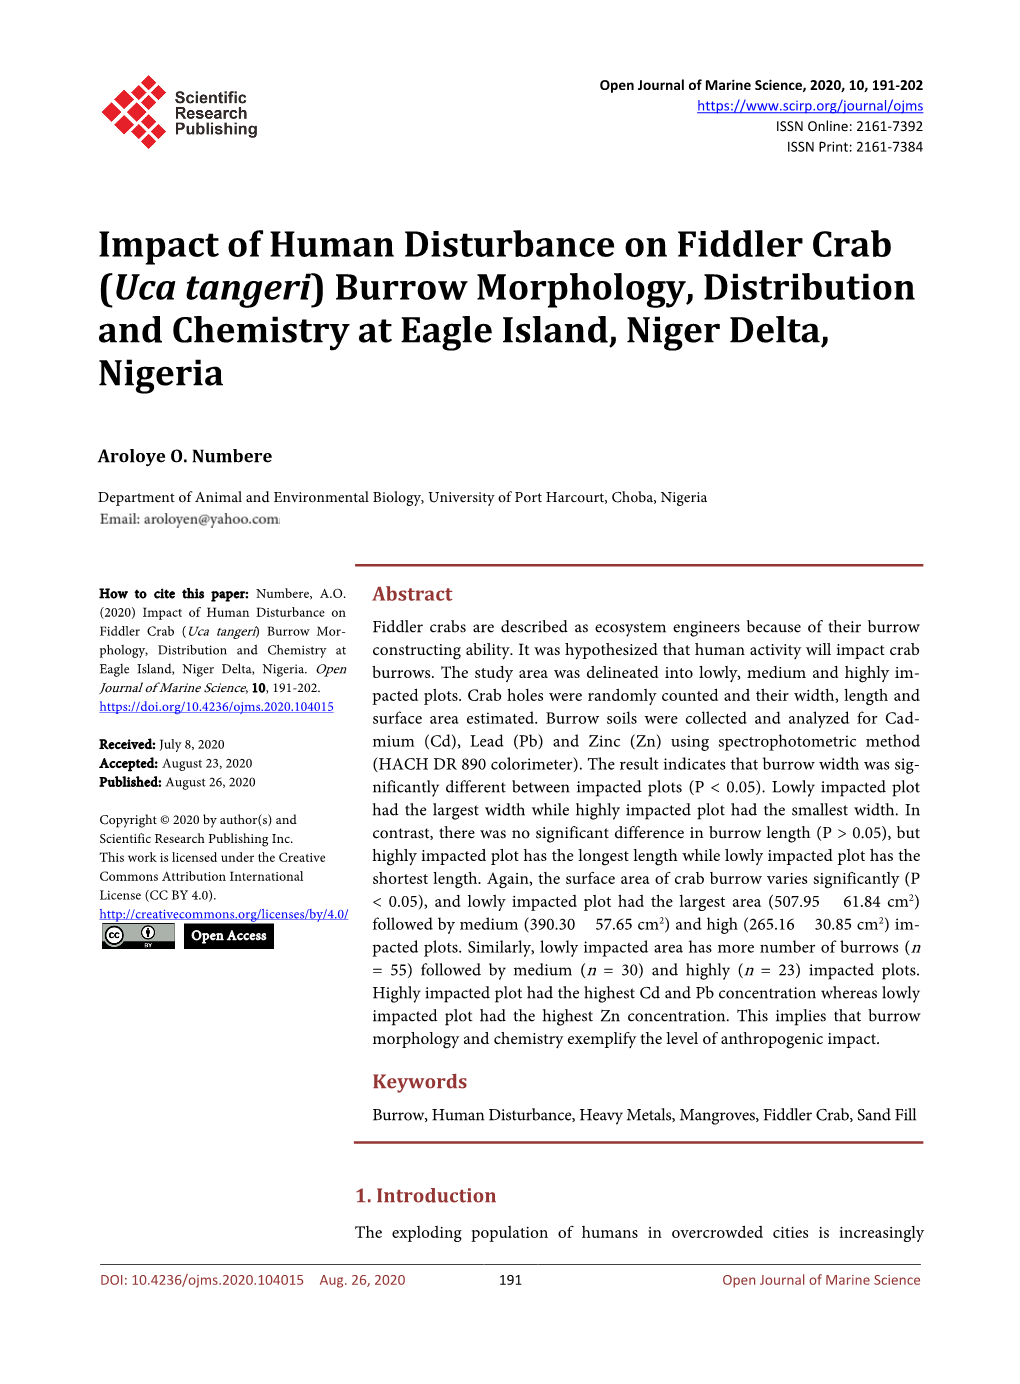 Impact of Human Disturbance on Fiddler Crab (Uca Tangeri) Burrow Morphology, Distribution and Chemistry at Eagle Island, Niger Delta, Nigeria